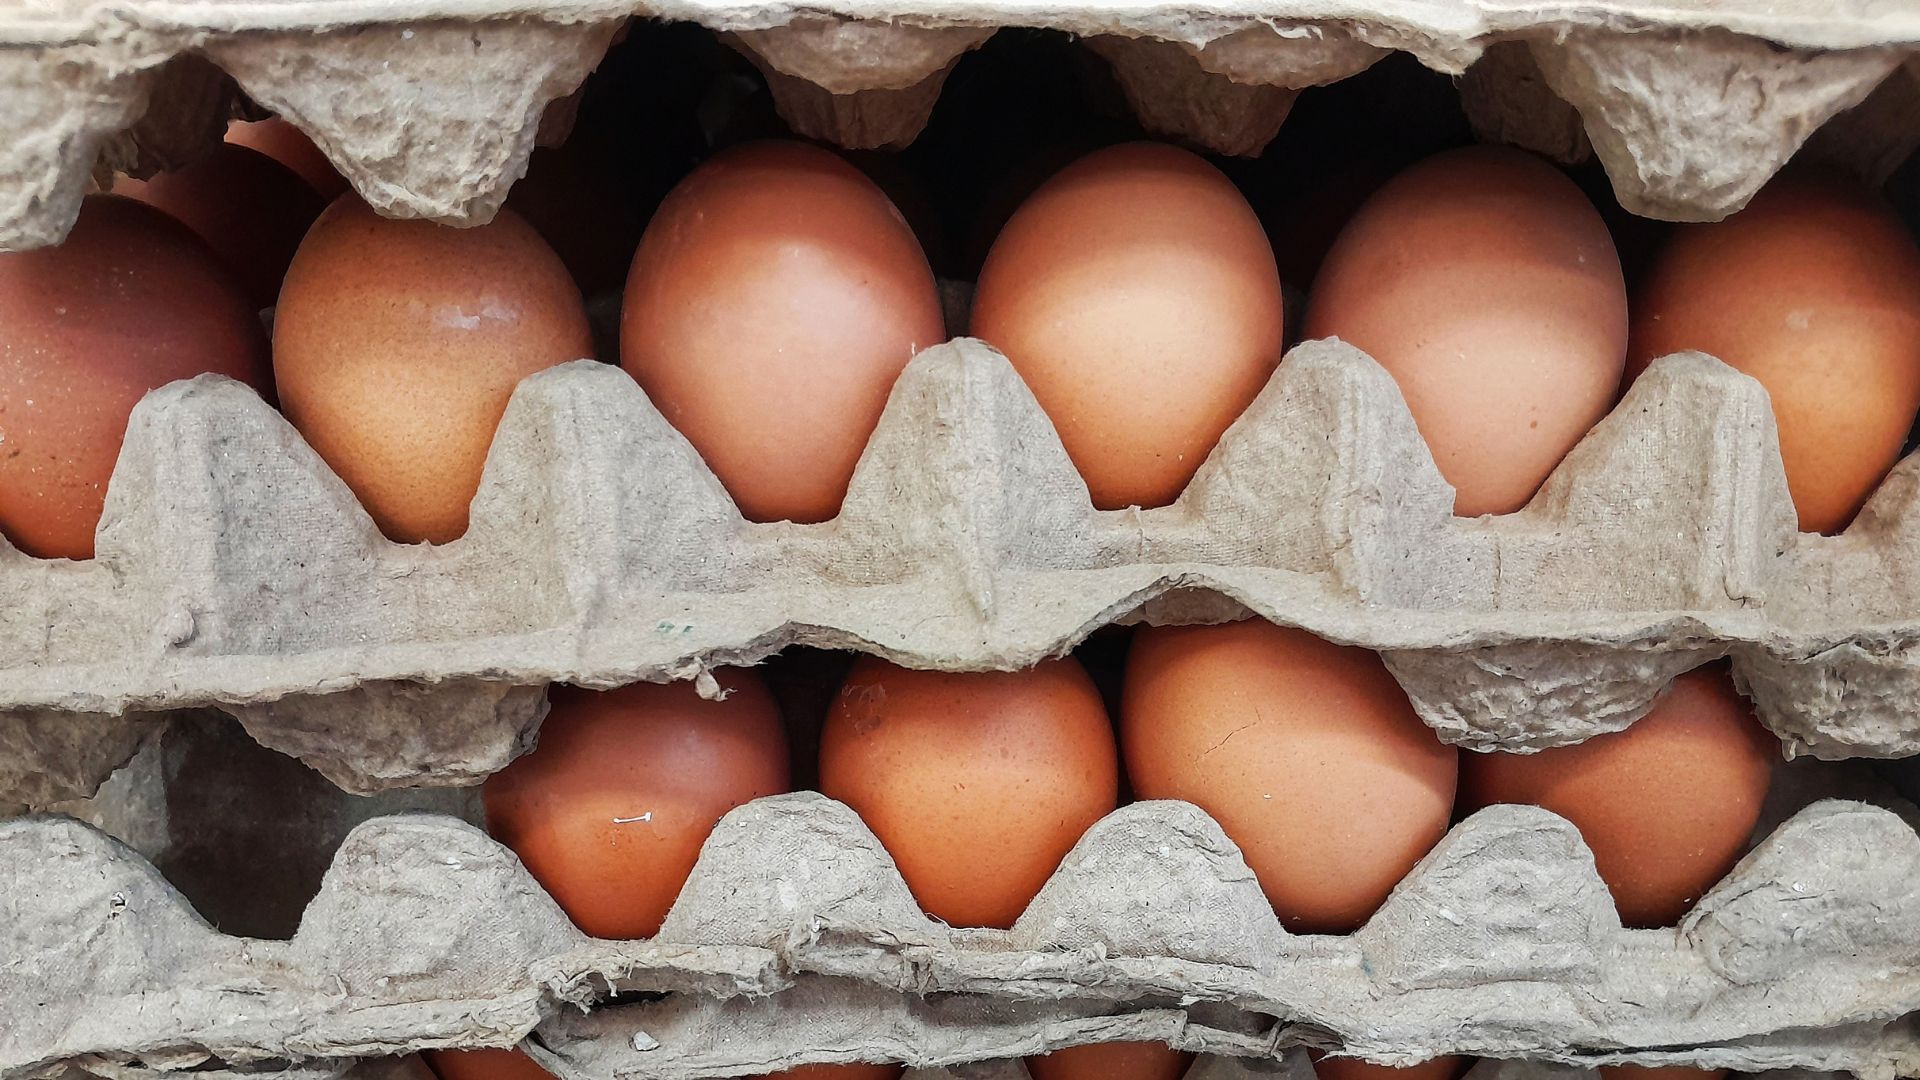 Usar cáscaras de huevo ayuda a que colombianos ahorren plata por sus beneficios